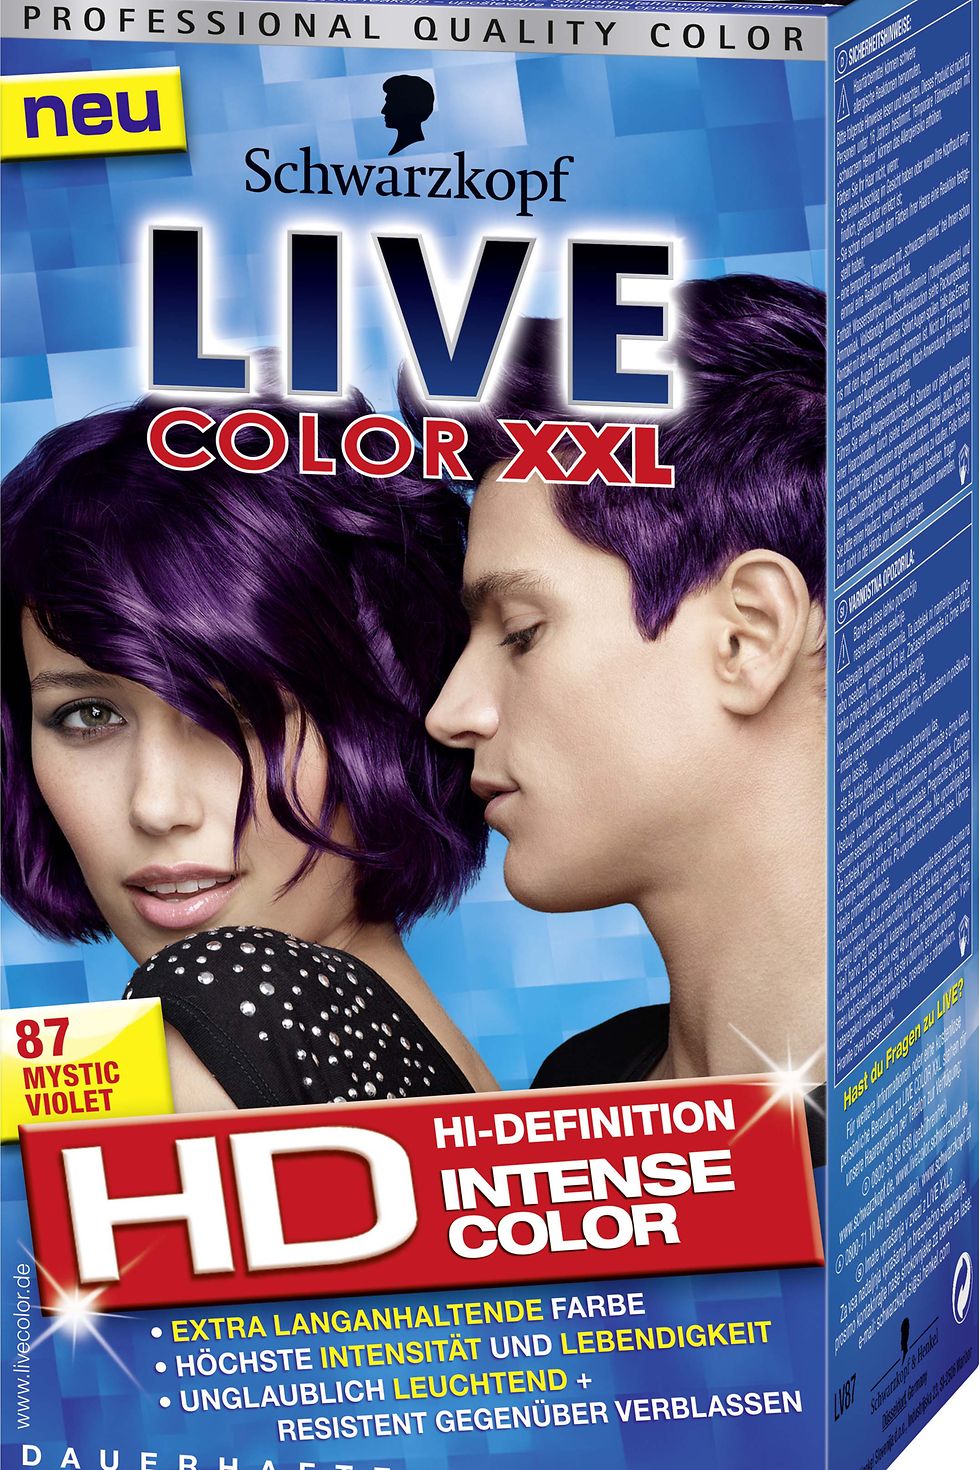 Live Color XXL HD 87 Mystic Violet